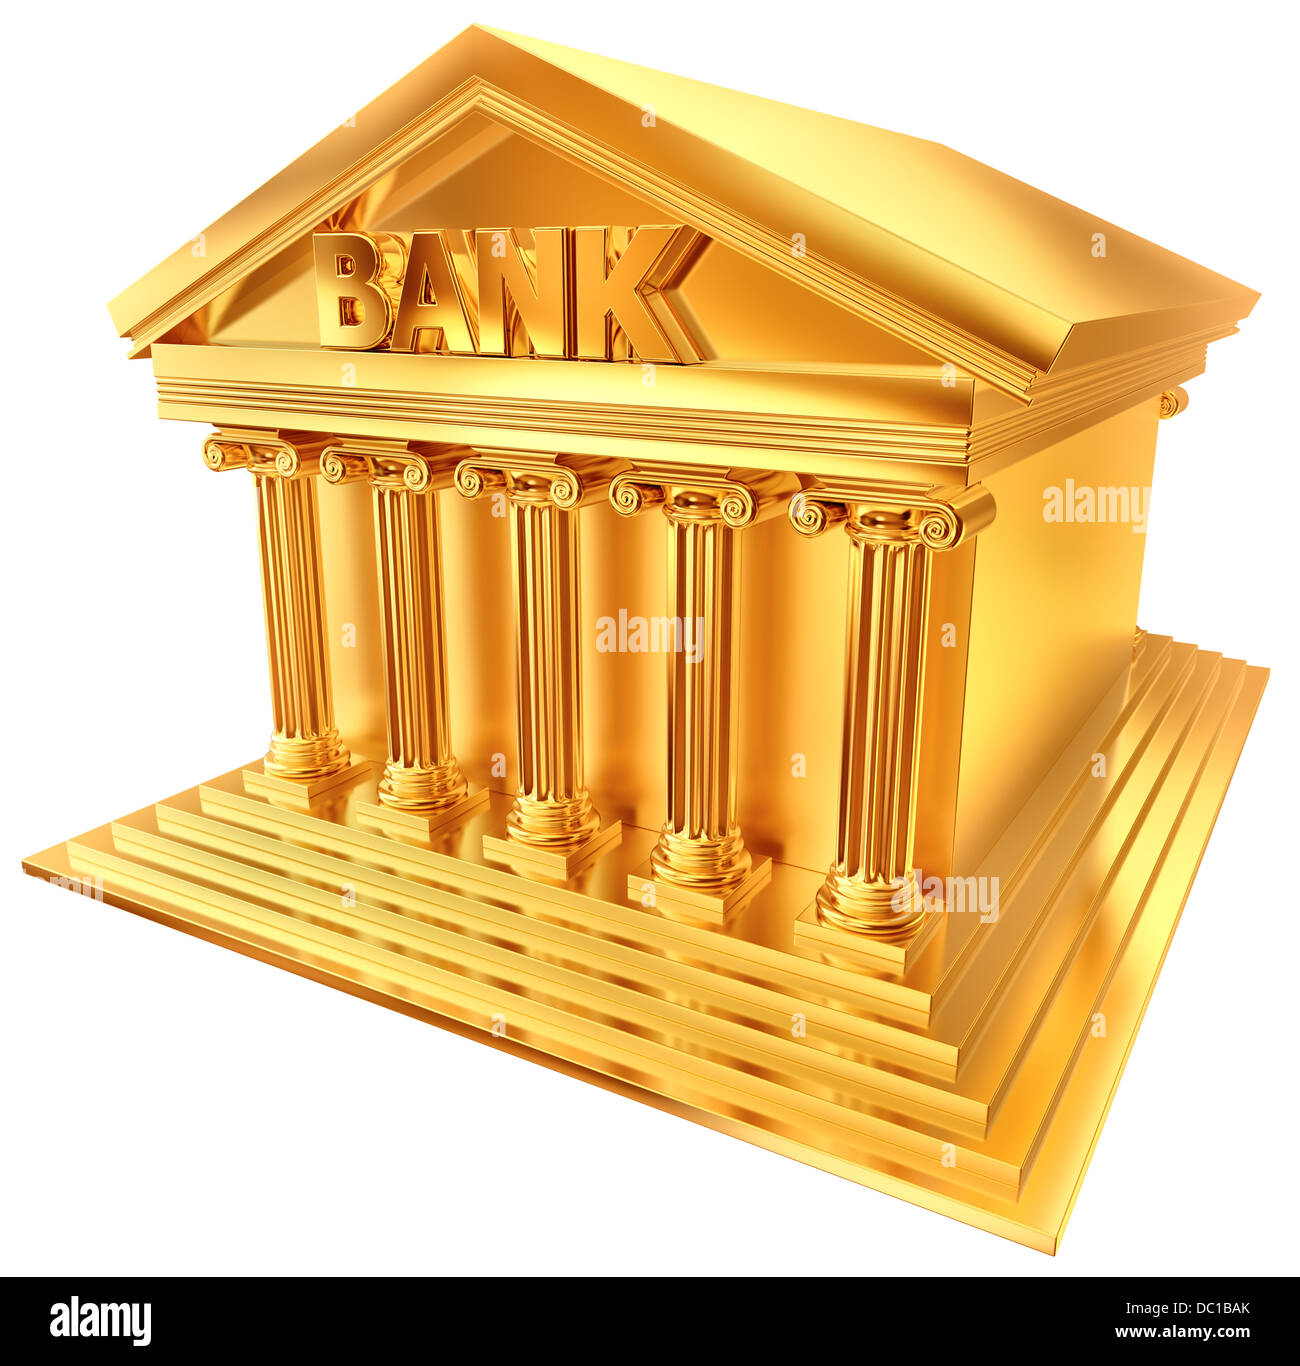 3D golden symbol of a bank building Stock Photo